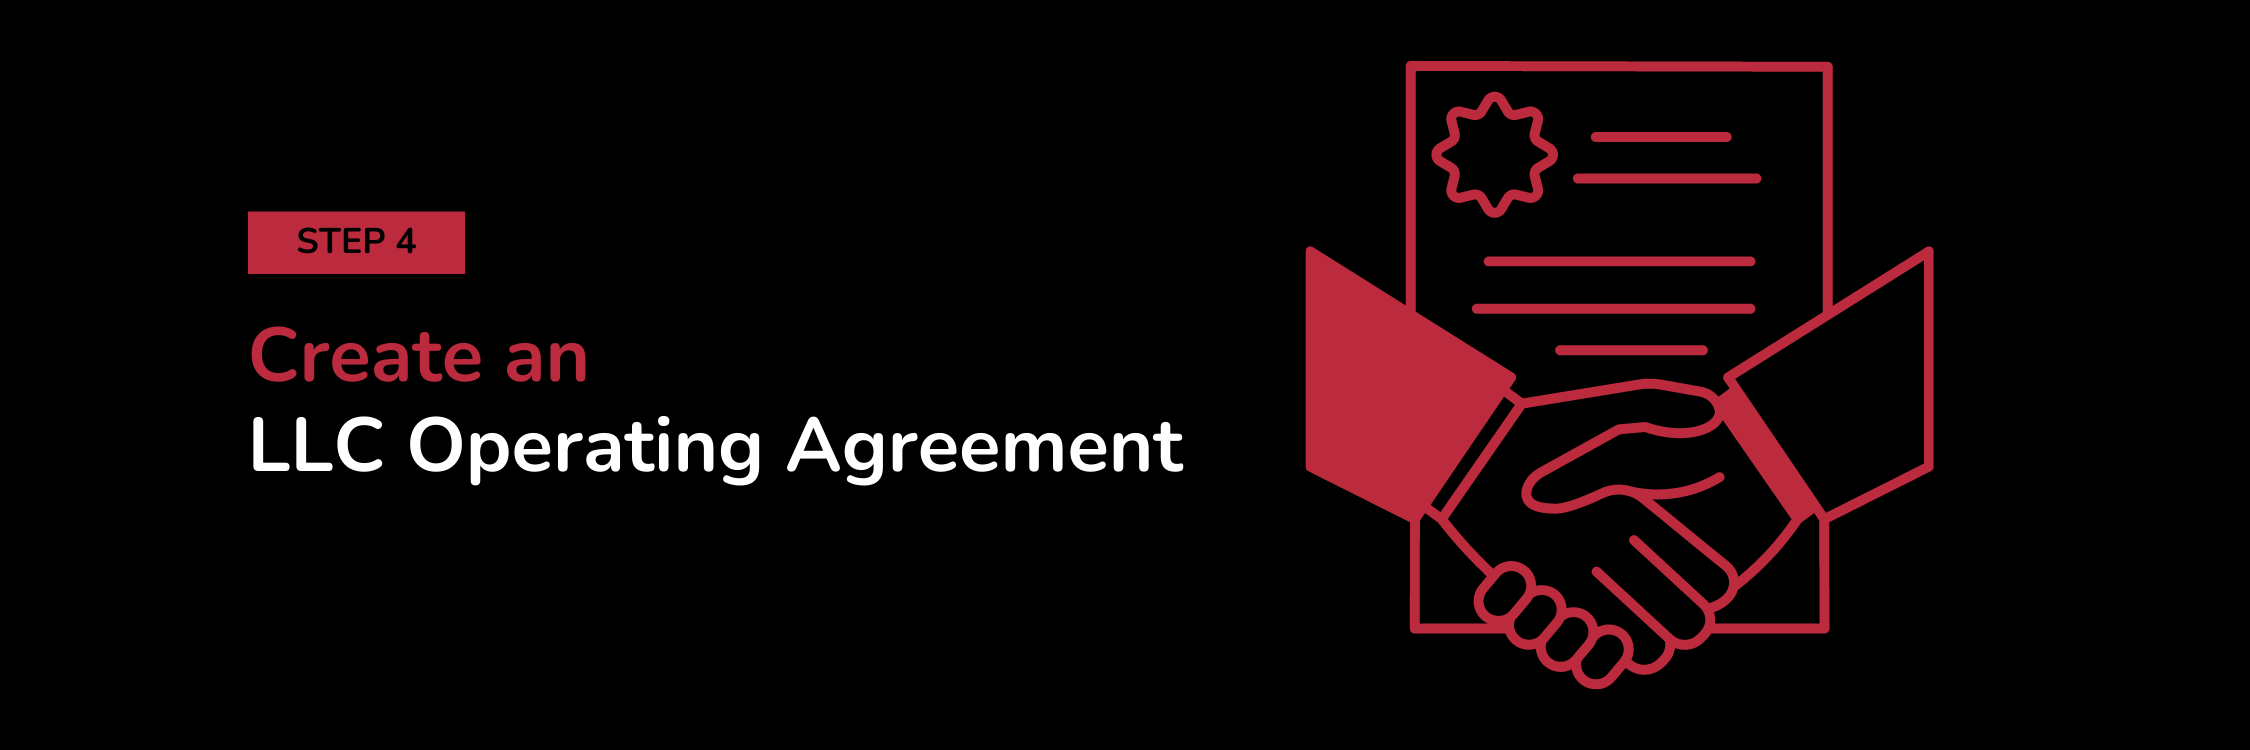 Step 4: Create an LLC Operating Agreement